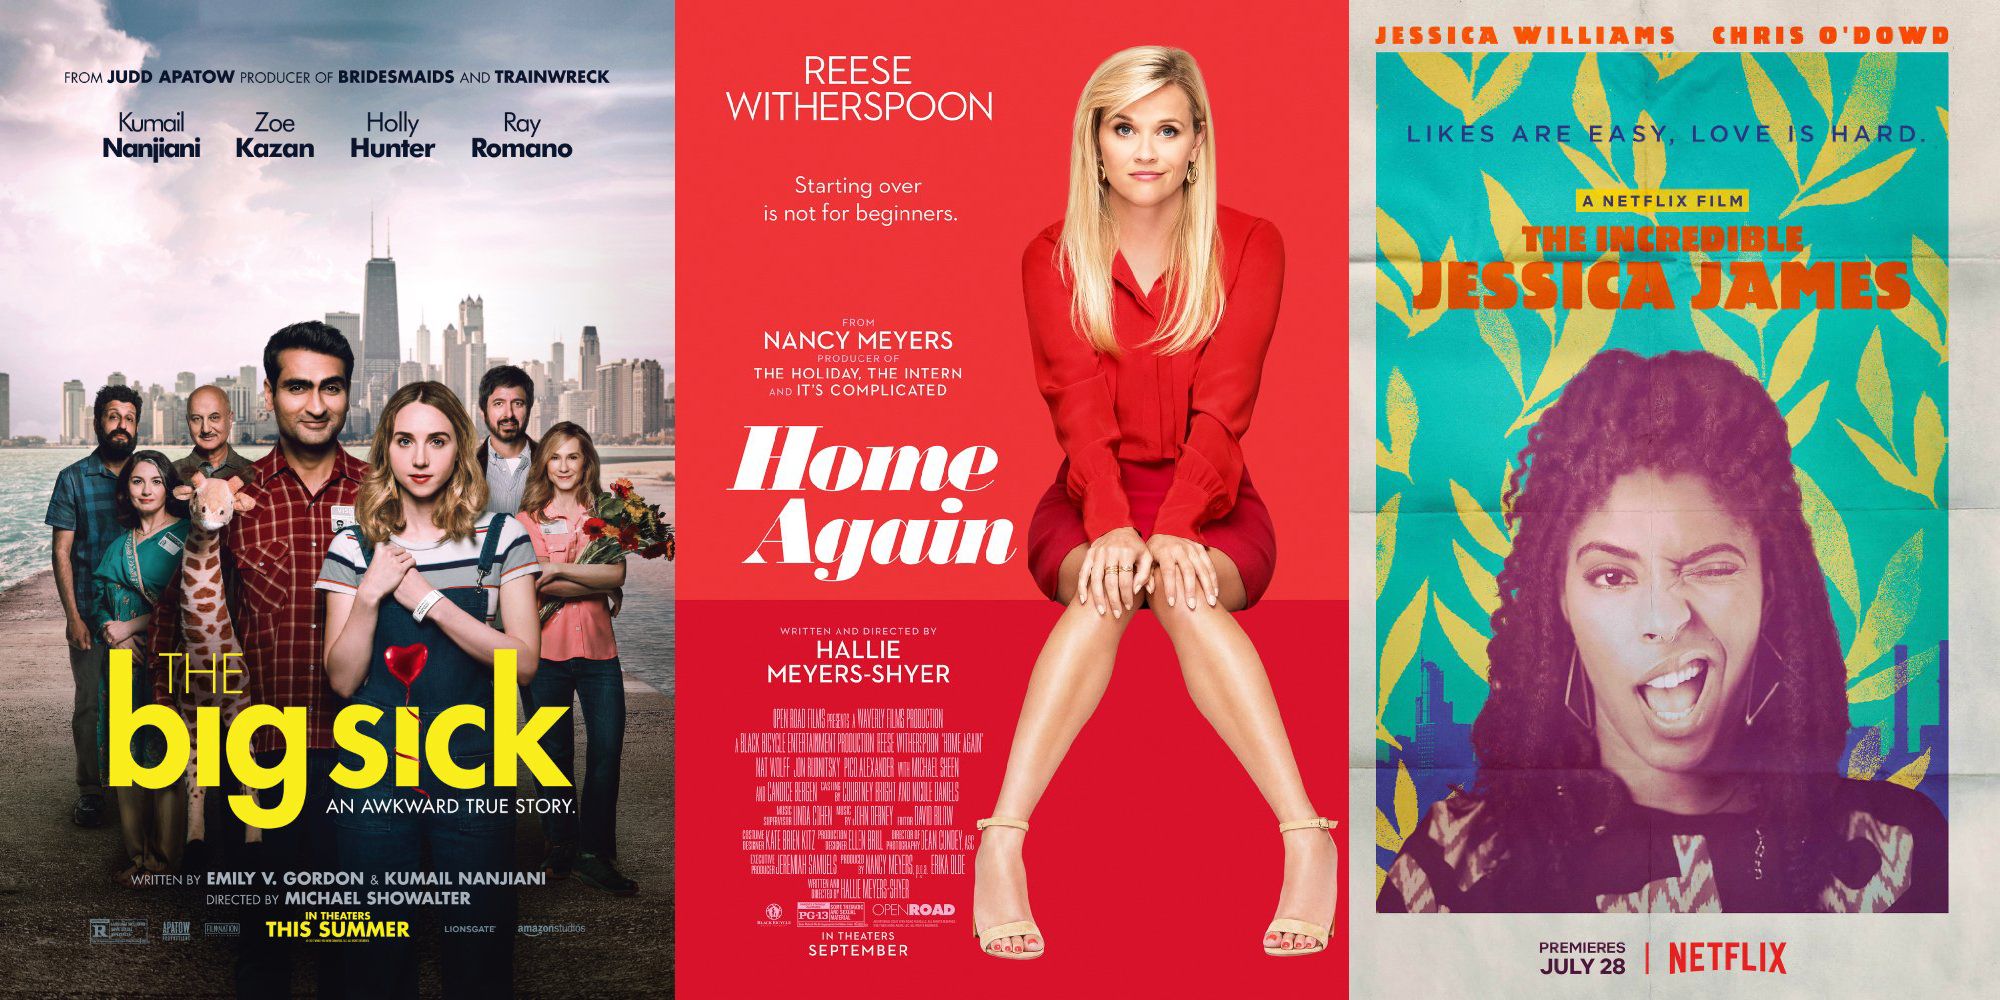 8 Best Romantic Comedies in 2017 - Top 2017 Rom Com Movies We Love